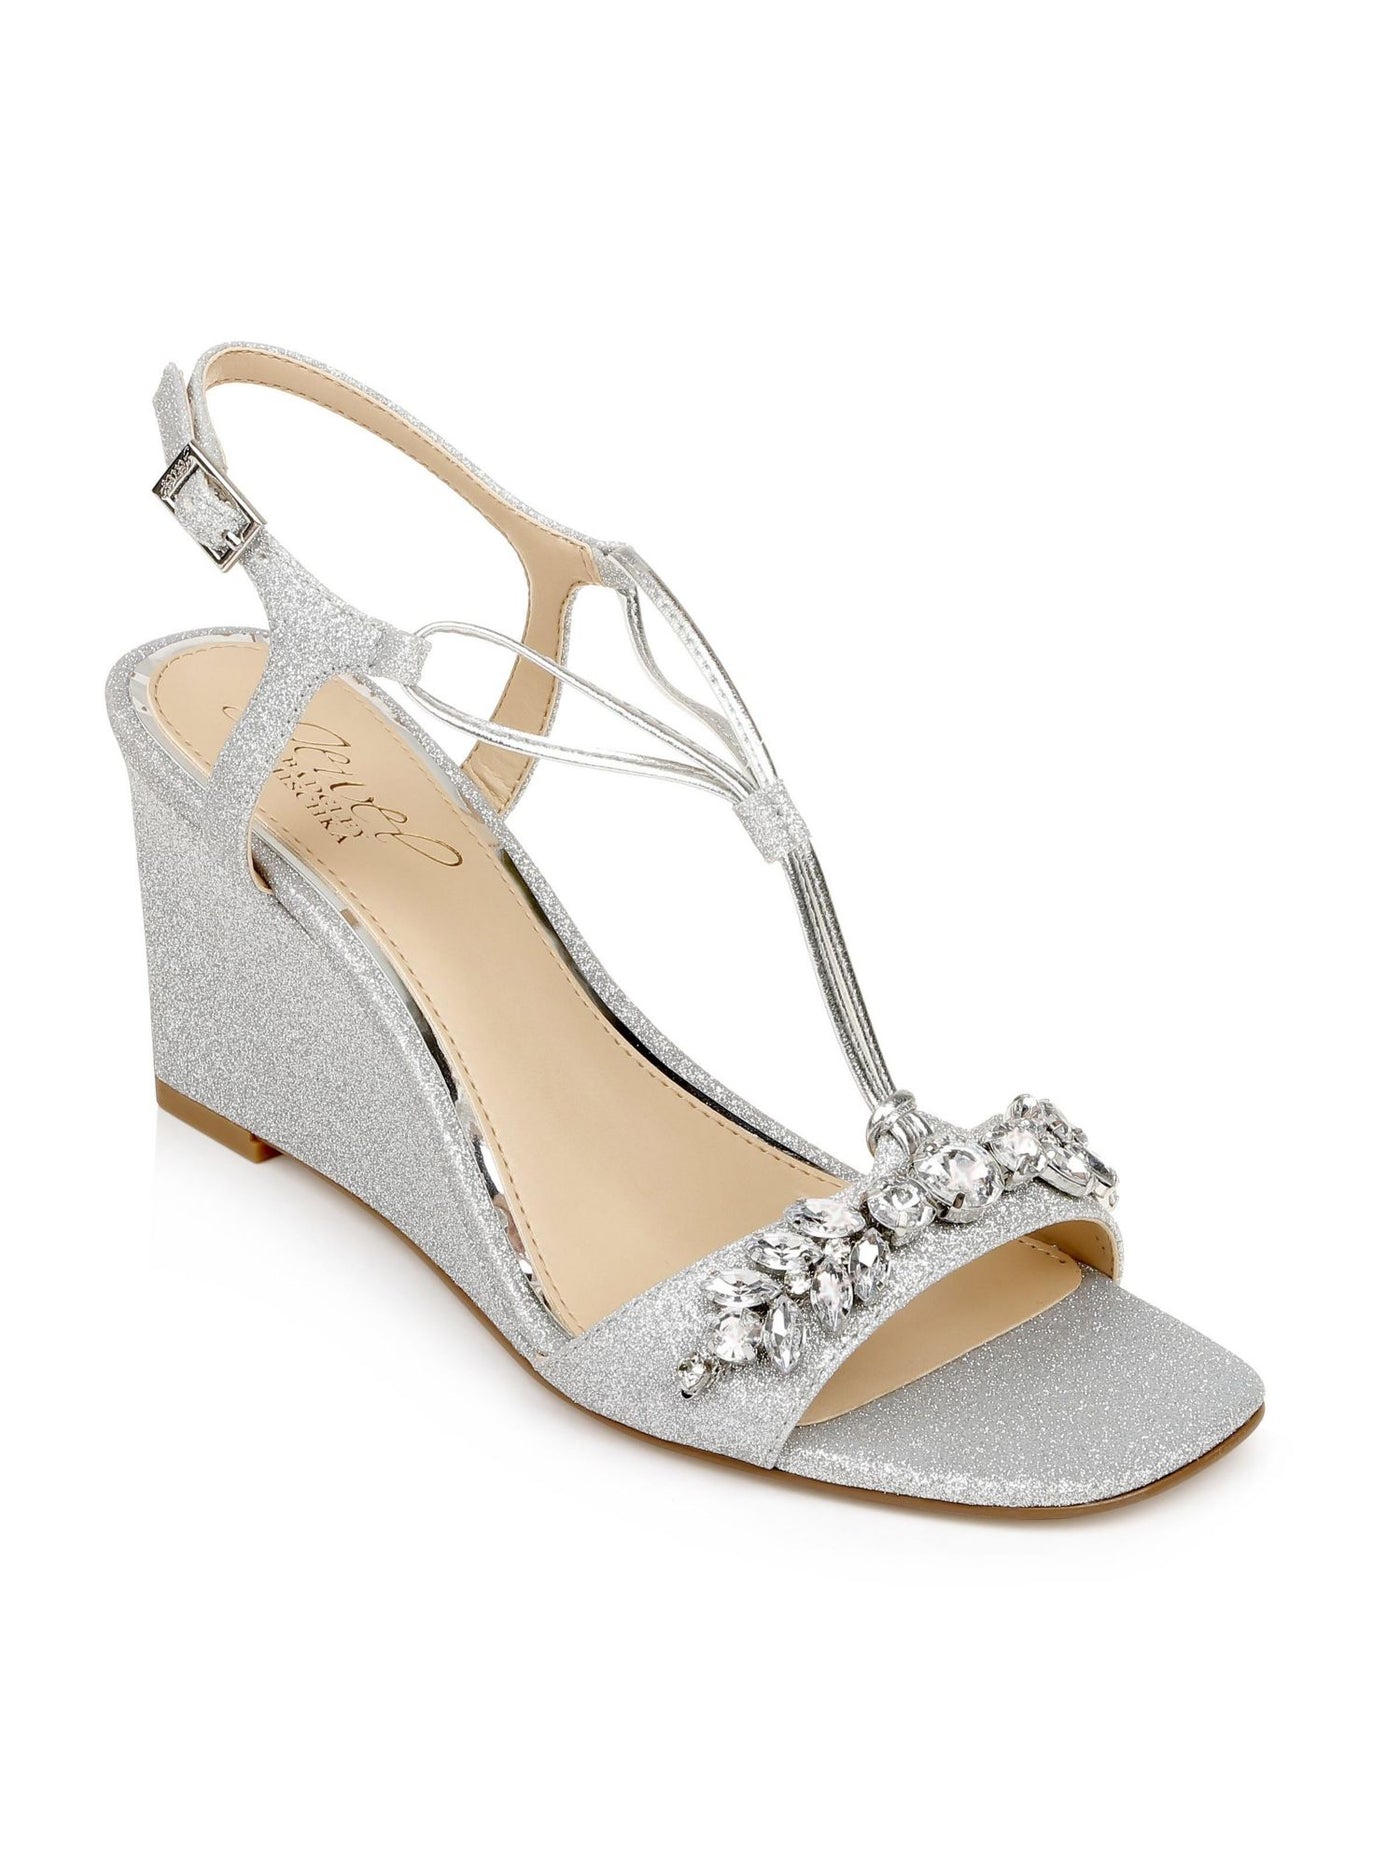 JEWEL BADGLEY MISCHKA Womens Silver Glitter Tubular Straps Comfort Adjustable Strap Gem Accent Oakes Square Toe Wedge Buckle Dress Sandals Shoes 7